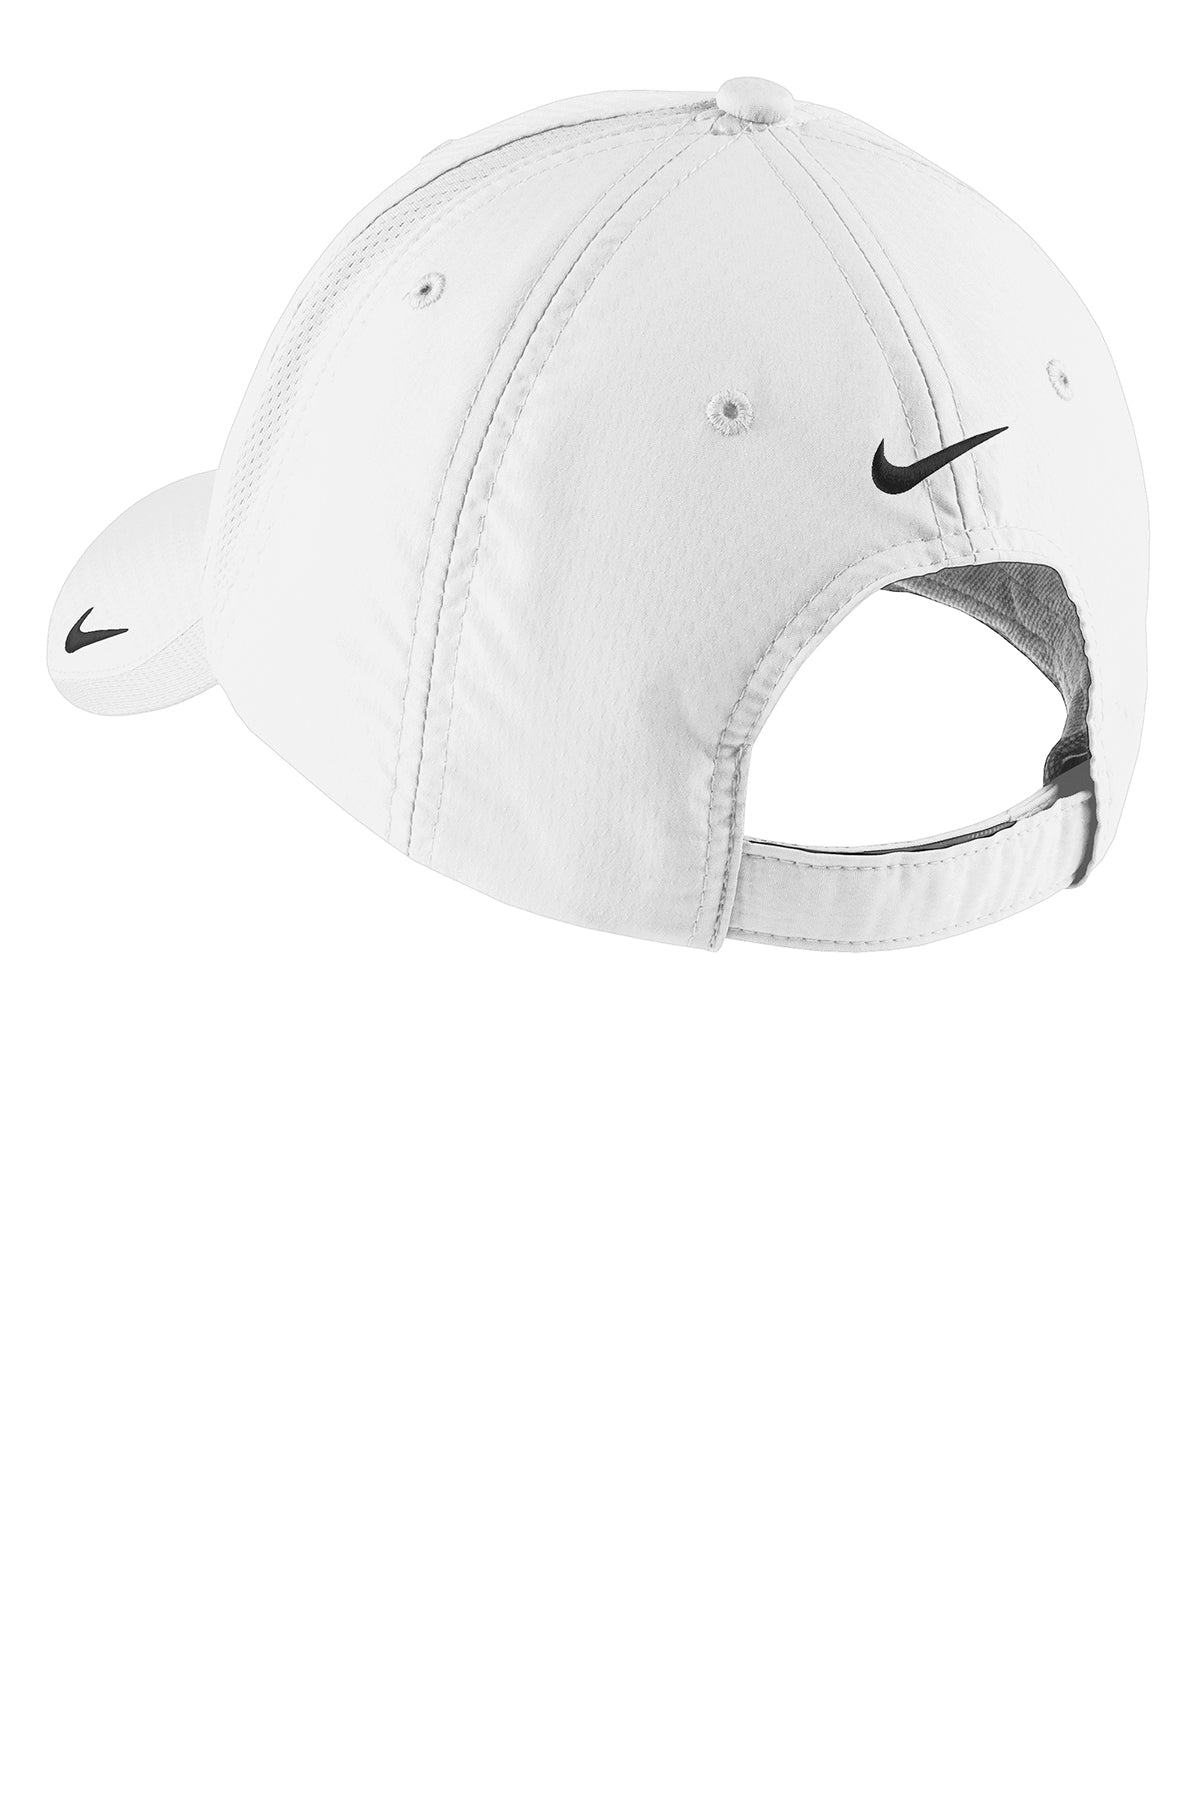 Nike Sphere Dry Custom Caps, White